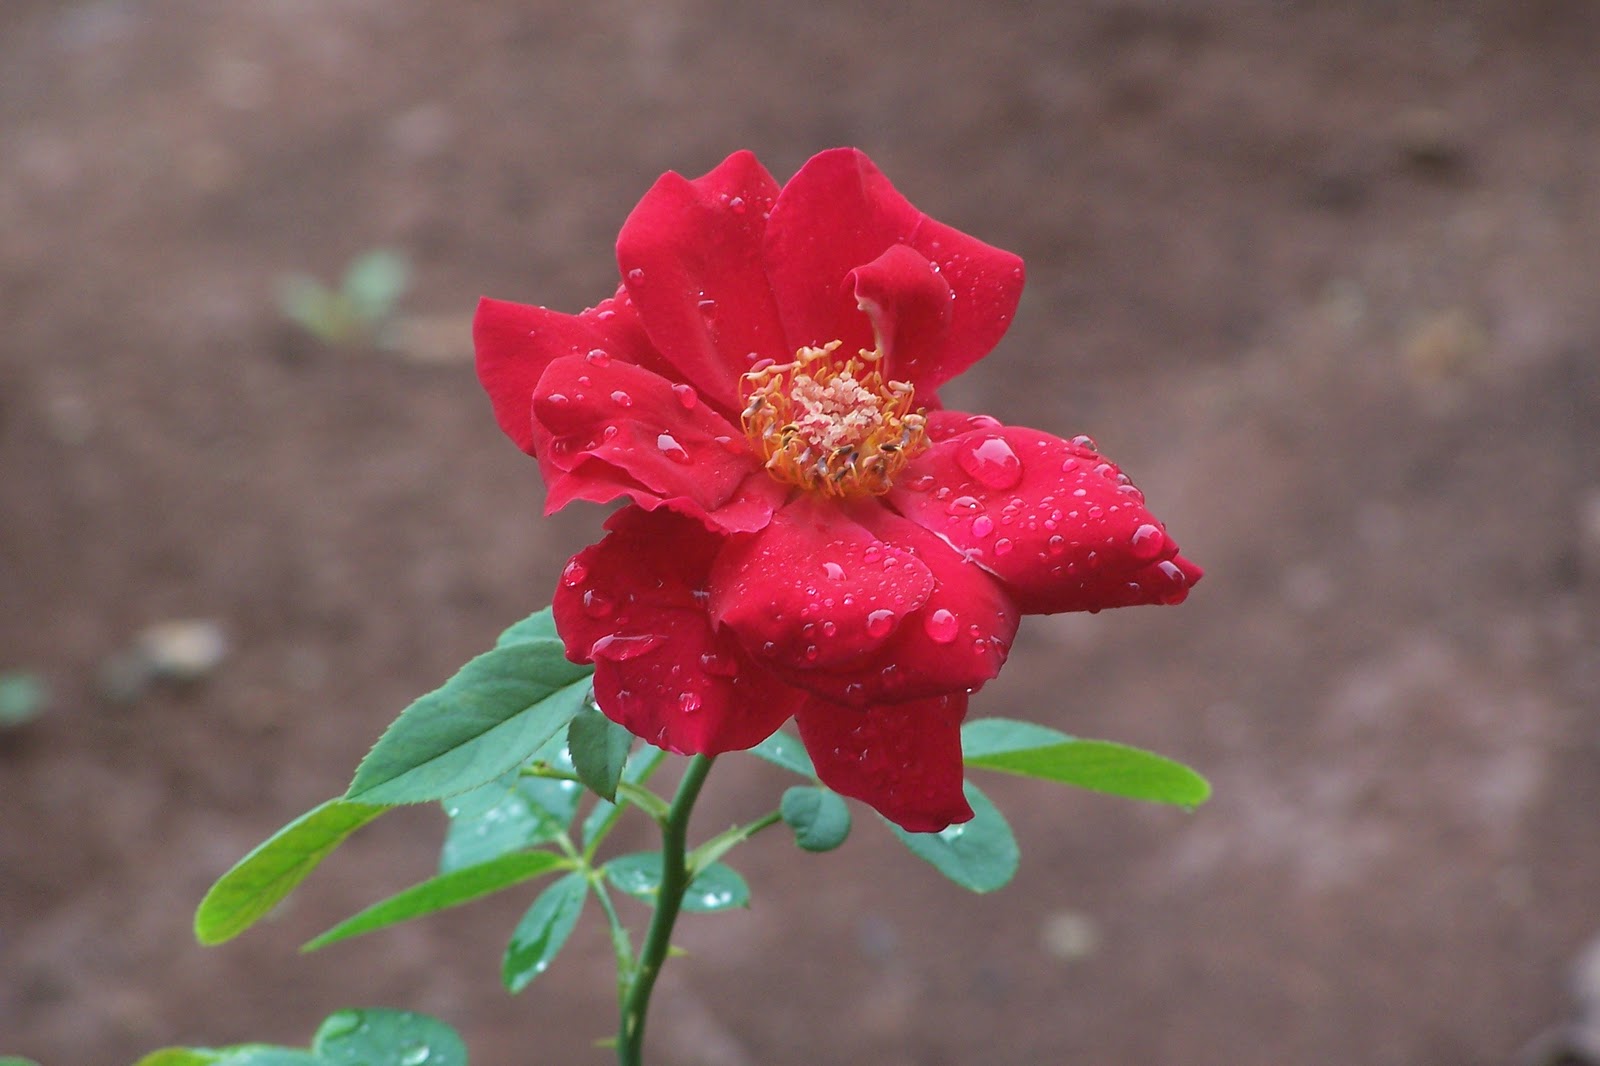  bunga mawar itu pun mekar di pagi hari setelah malam 